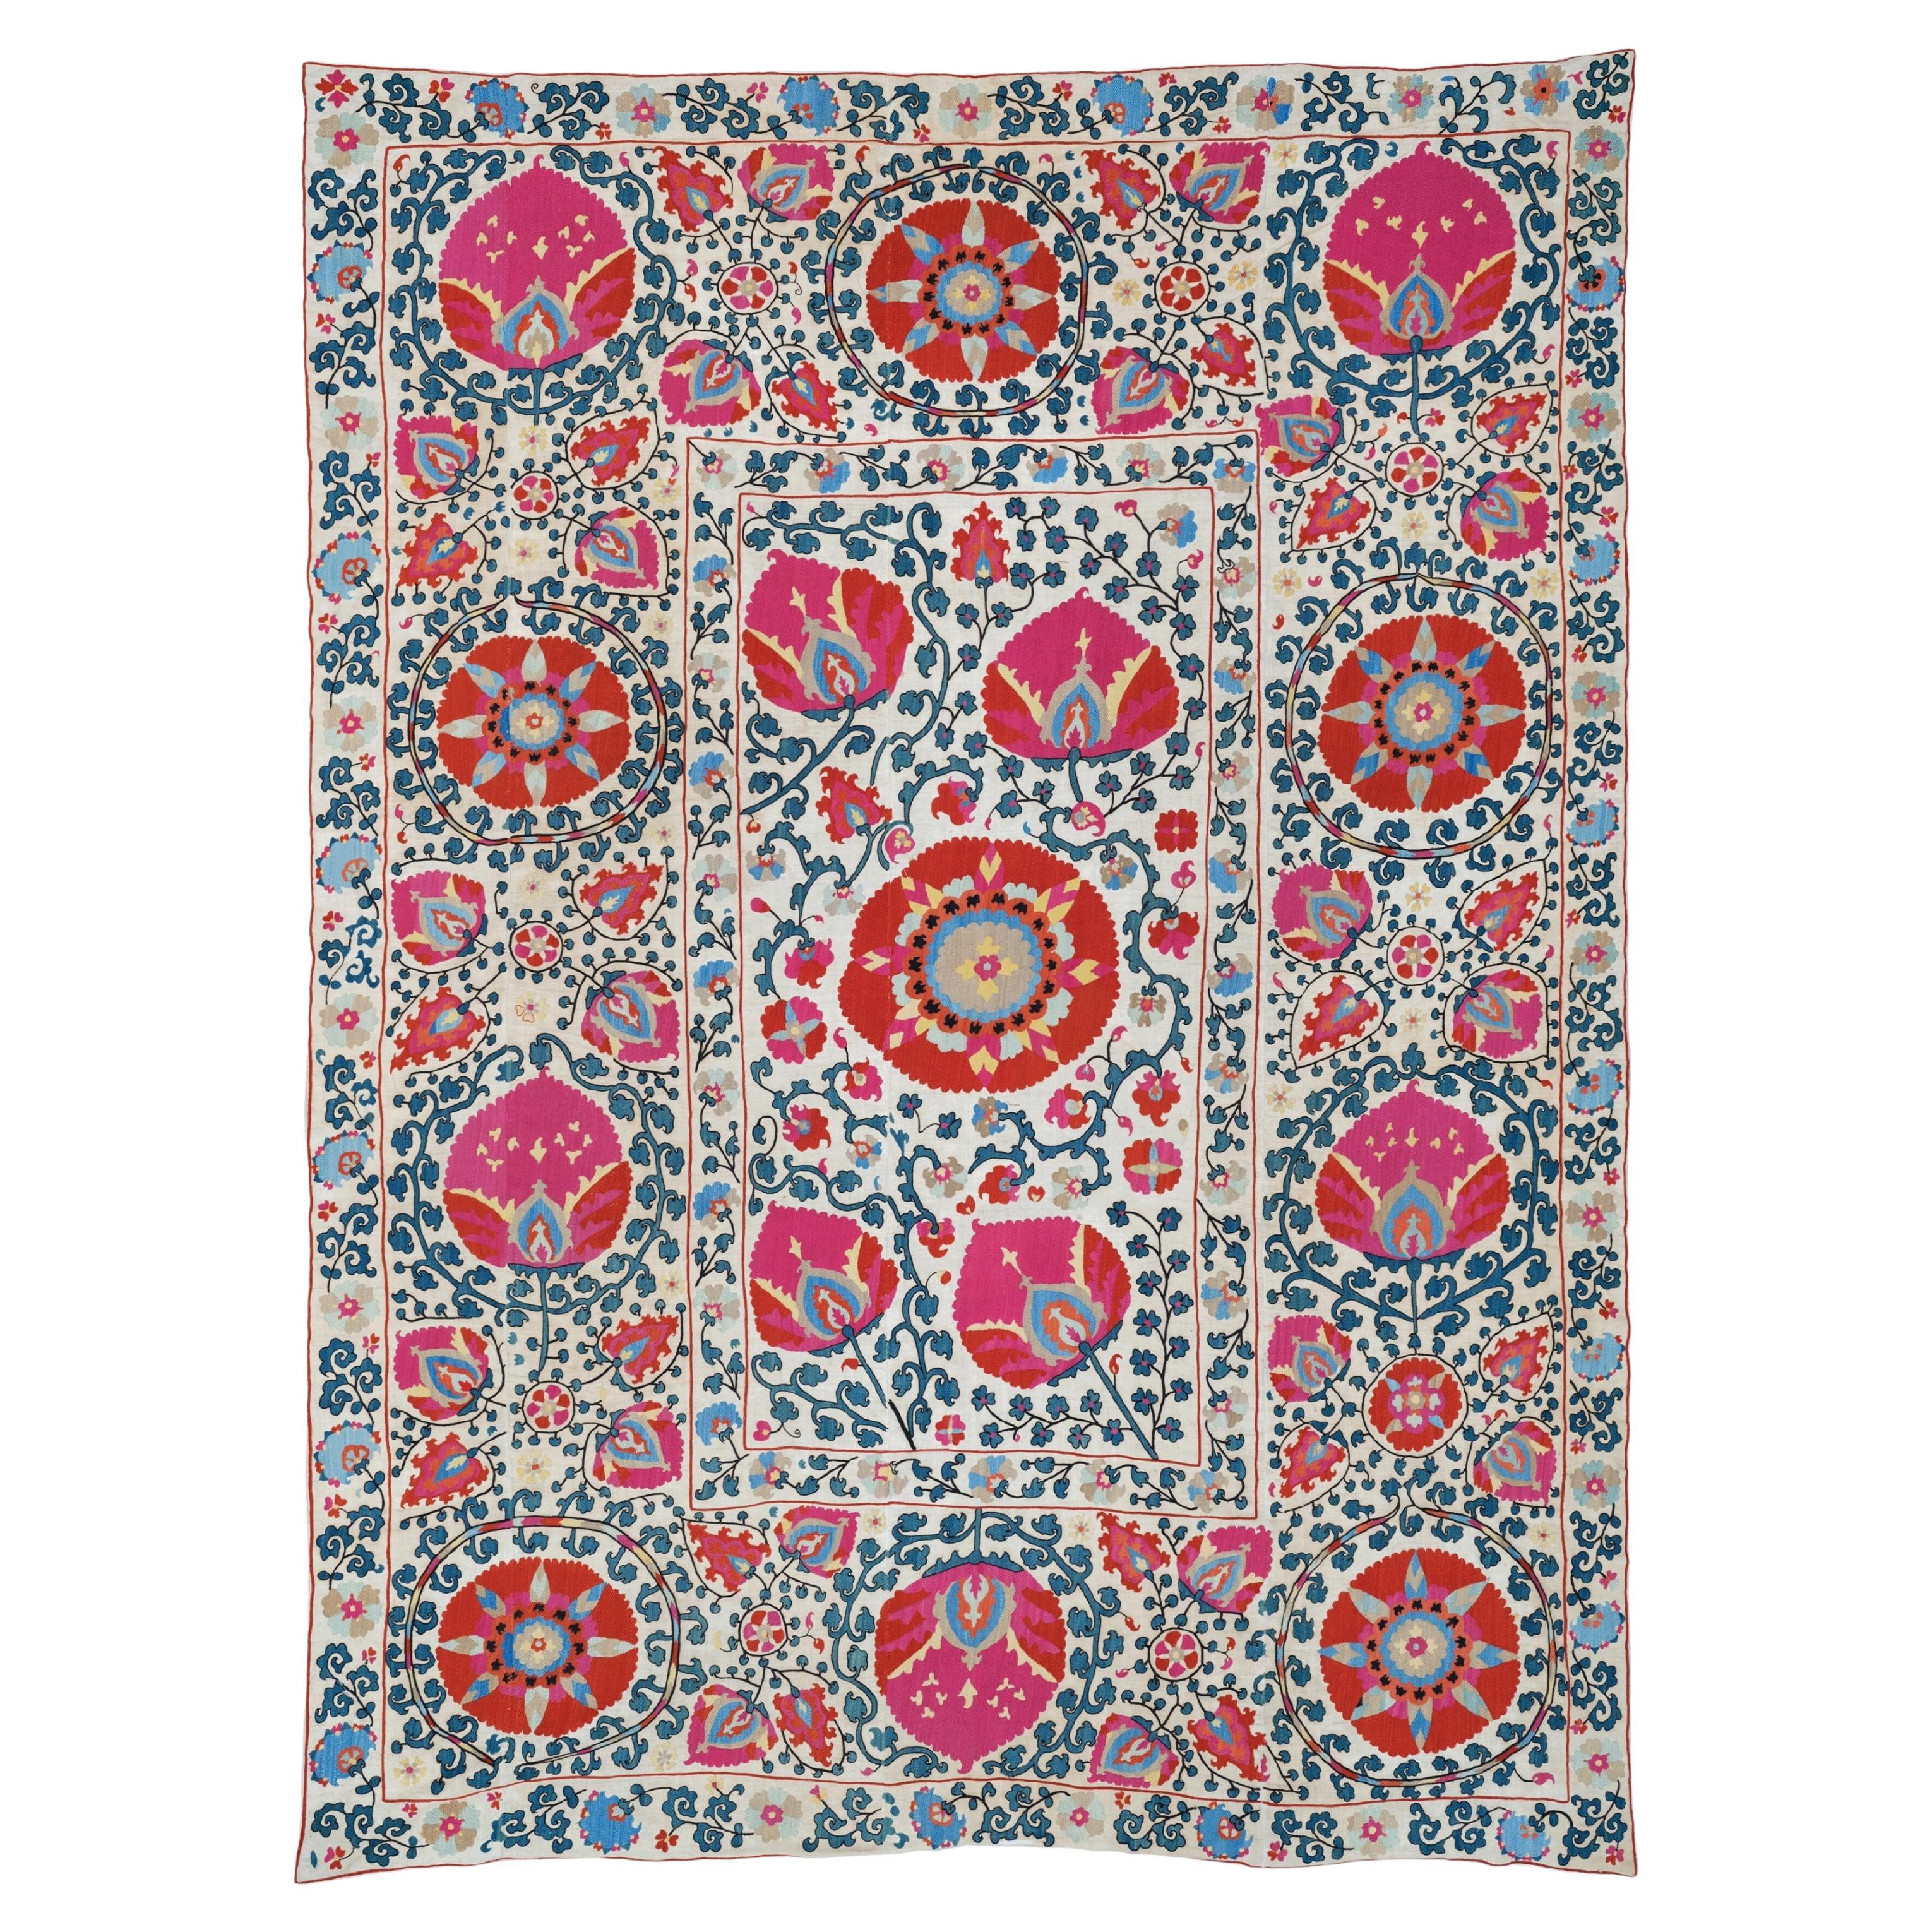 Early 19th Century Uzbekistan Shahrisyabz Suzani, Silk on Cotton Ground For Sale